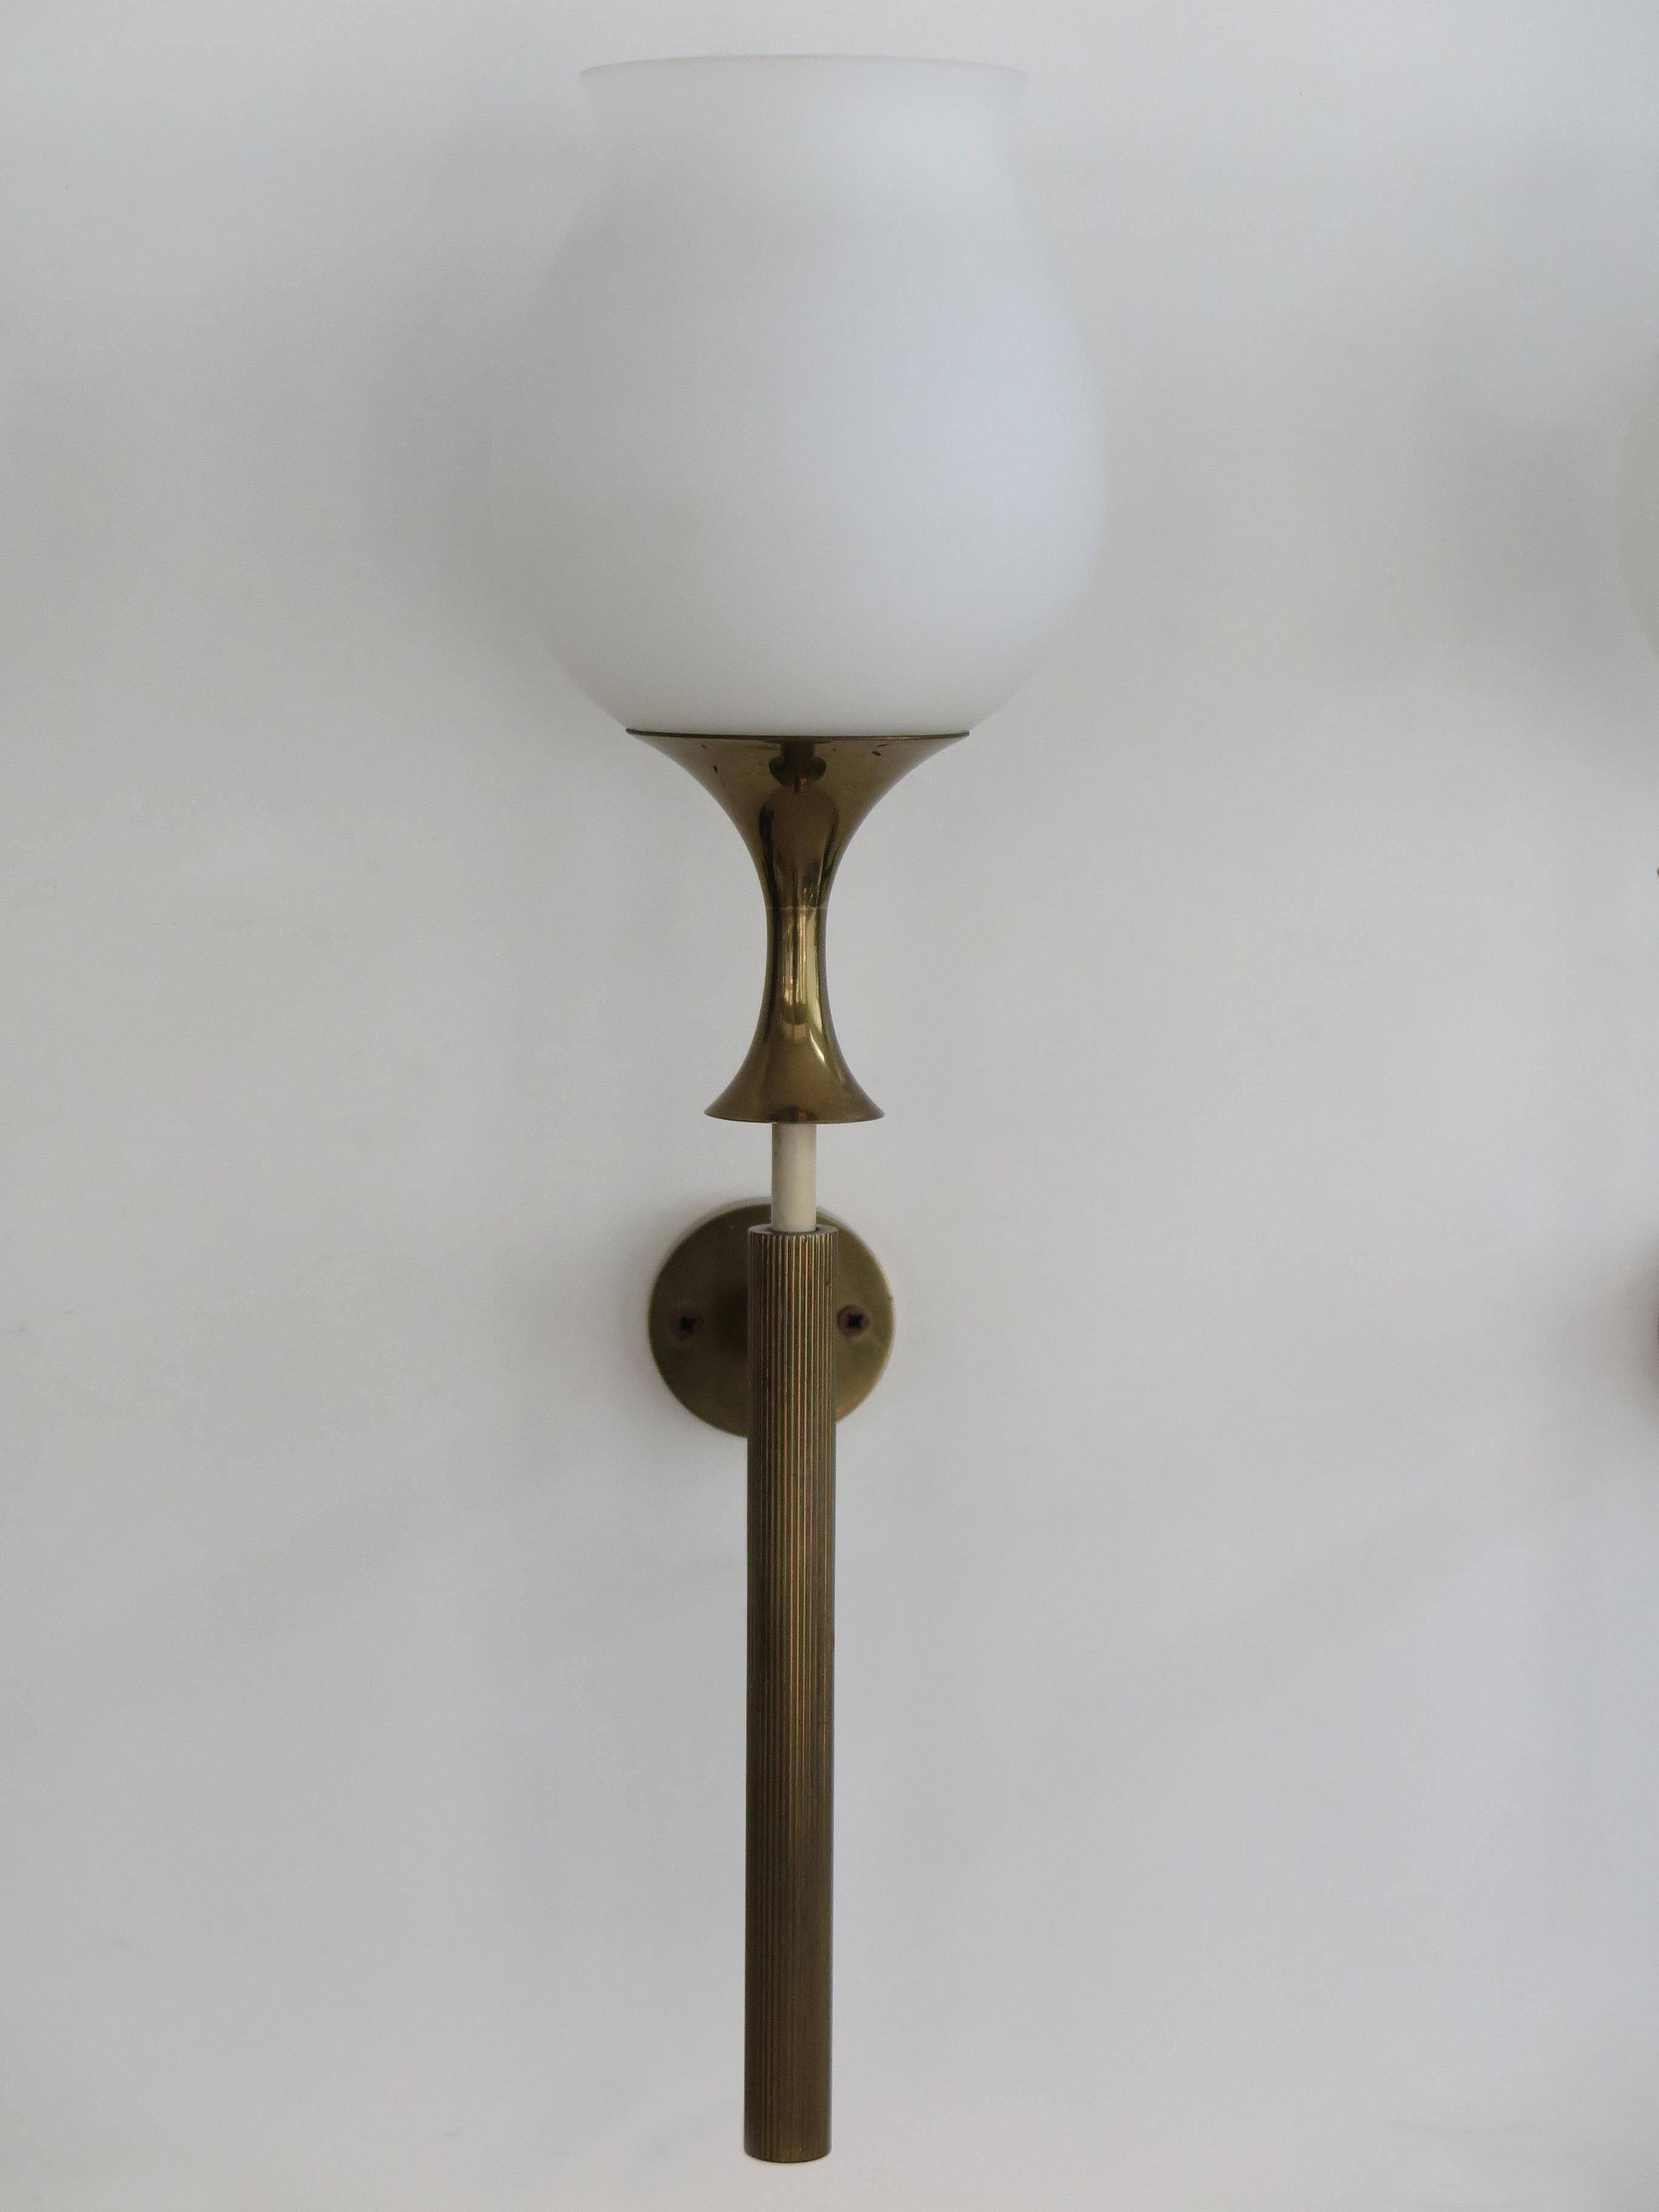 Angelo Lelii Italian Midcentury Glass Brass Sconces Wall Lamps Arredoluce 1950s For Sale 3